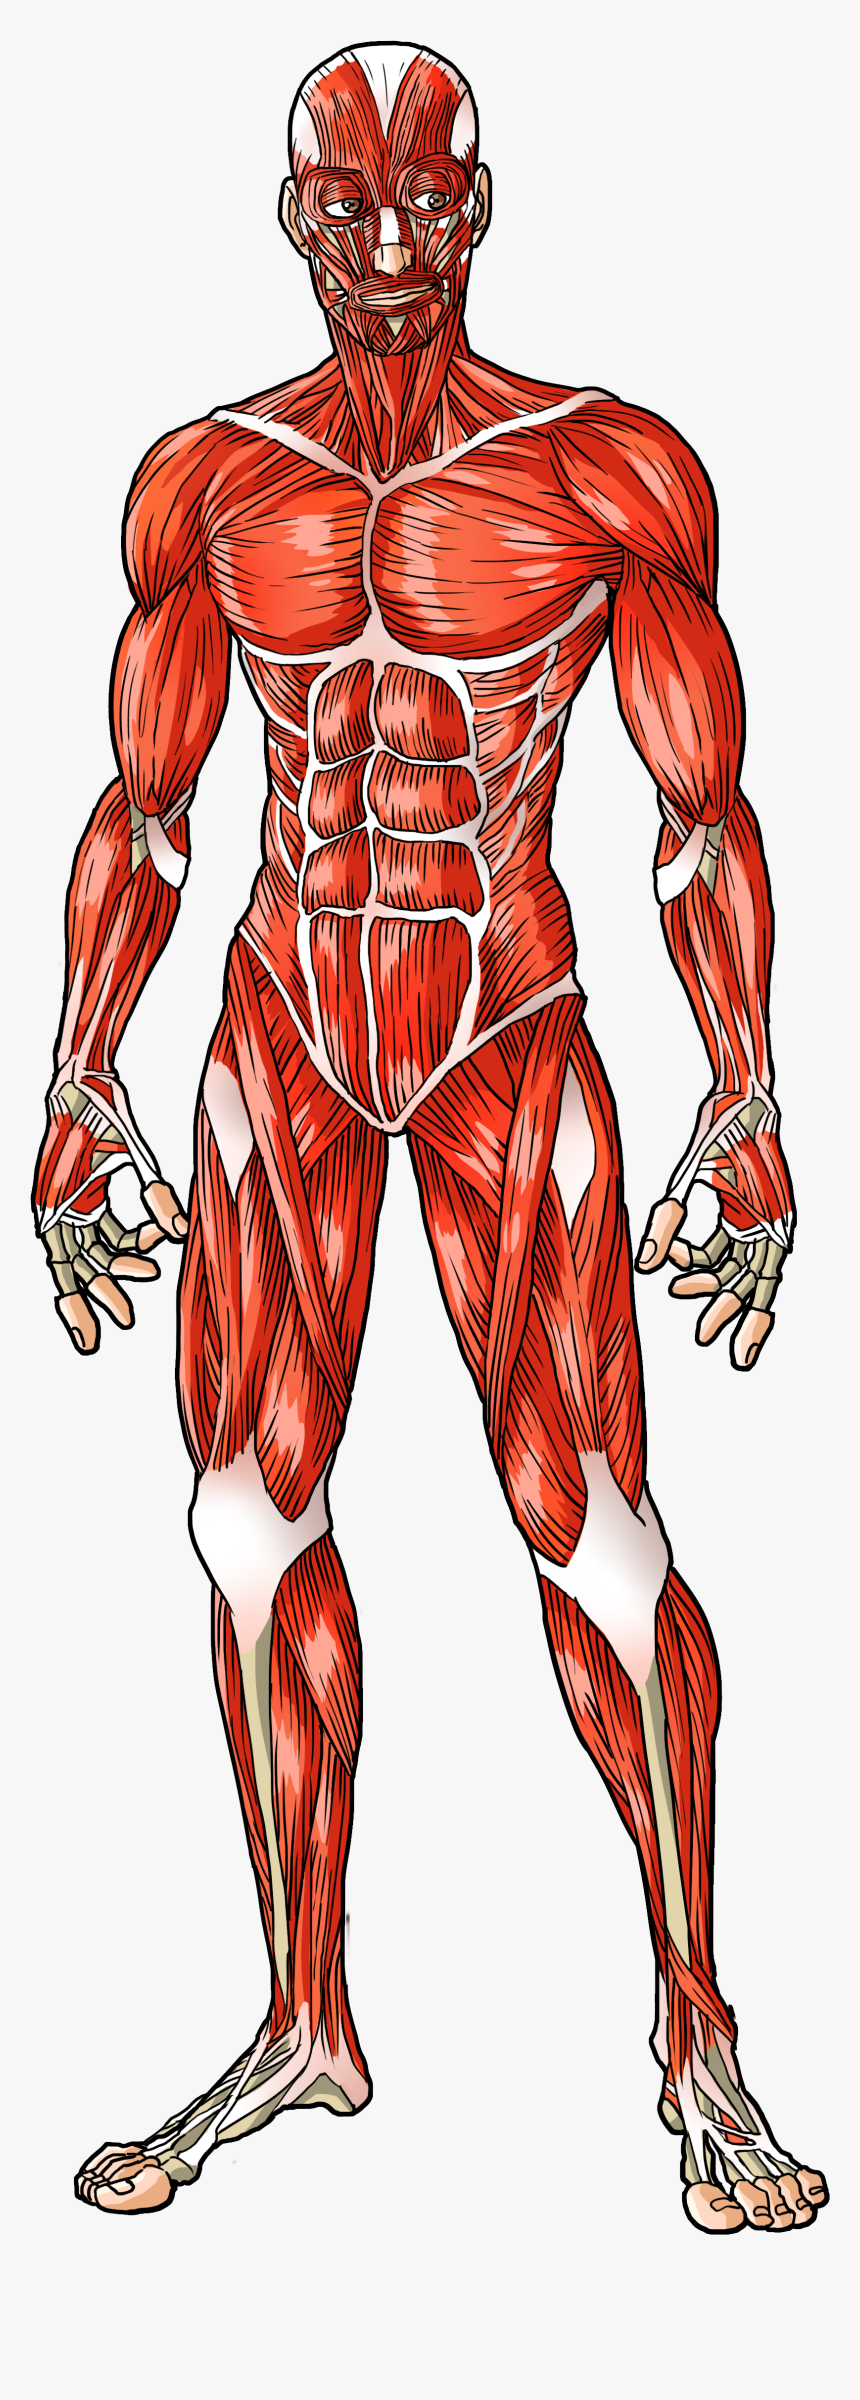 Å! 28+ Grunner til Human Muscles Diagram? Muscle diagrams are a great